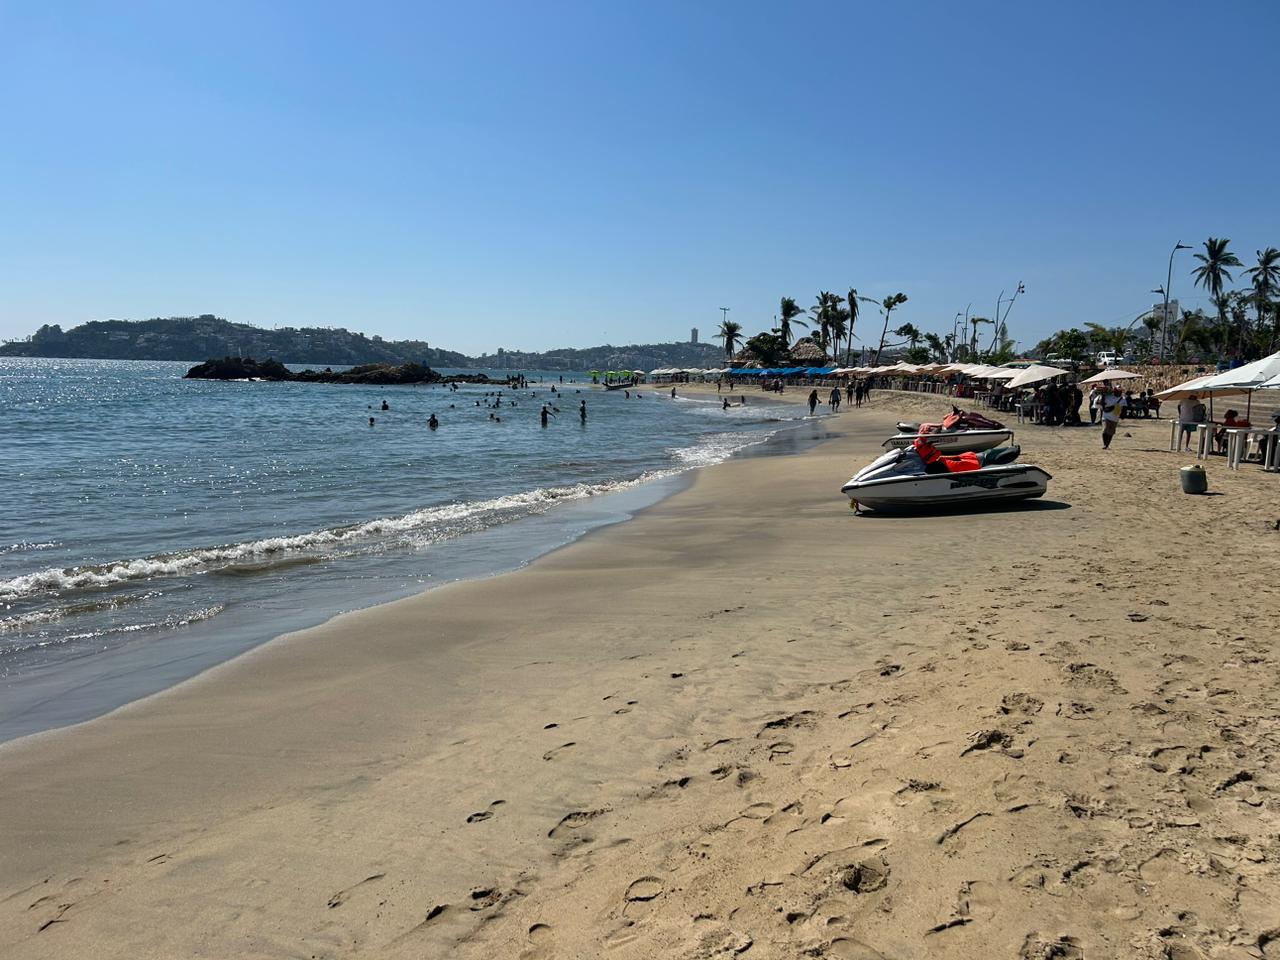 Escasea turismo en Acapulco a consecuencia del huracán Otis